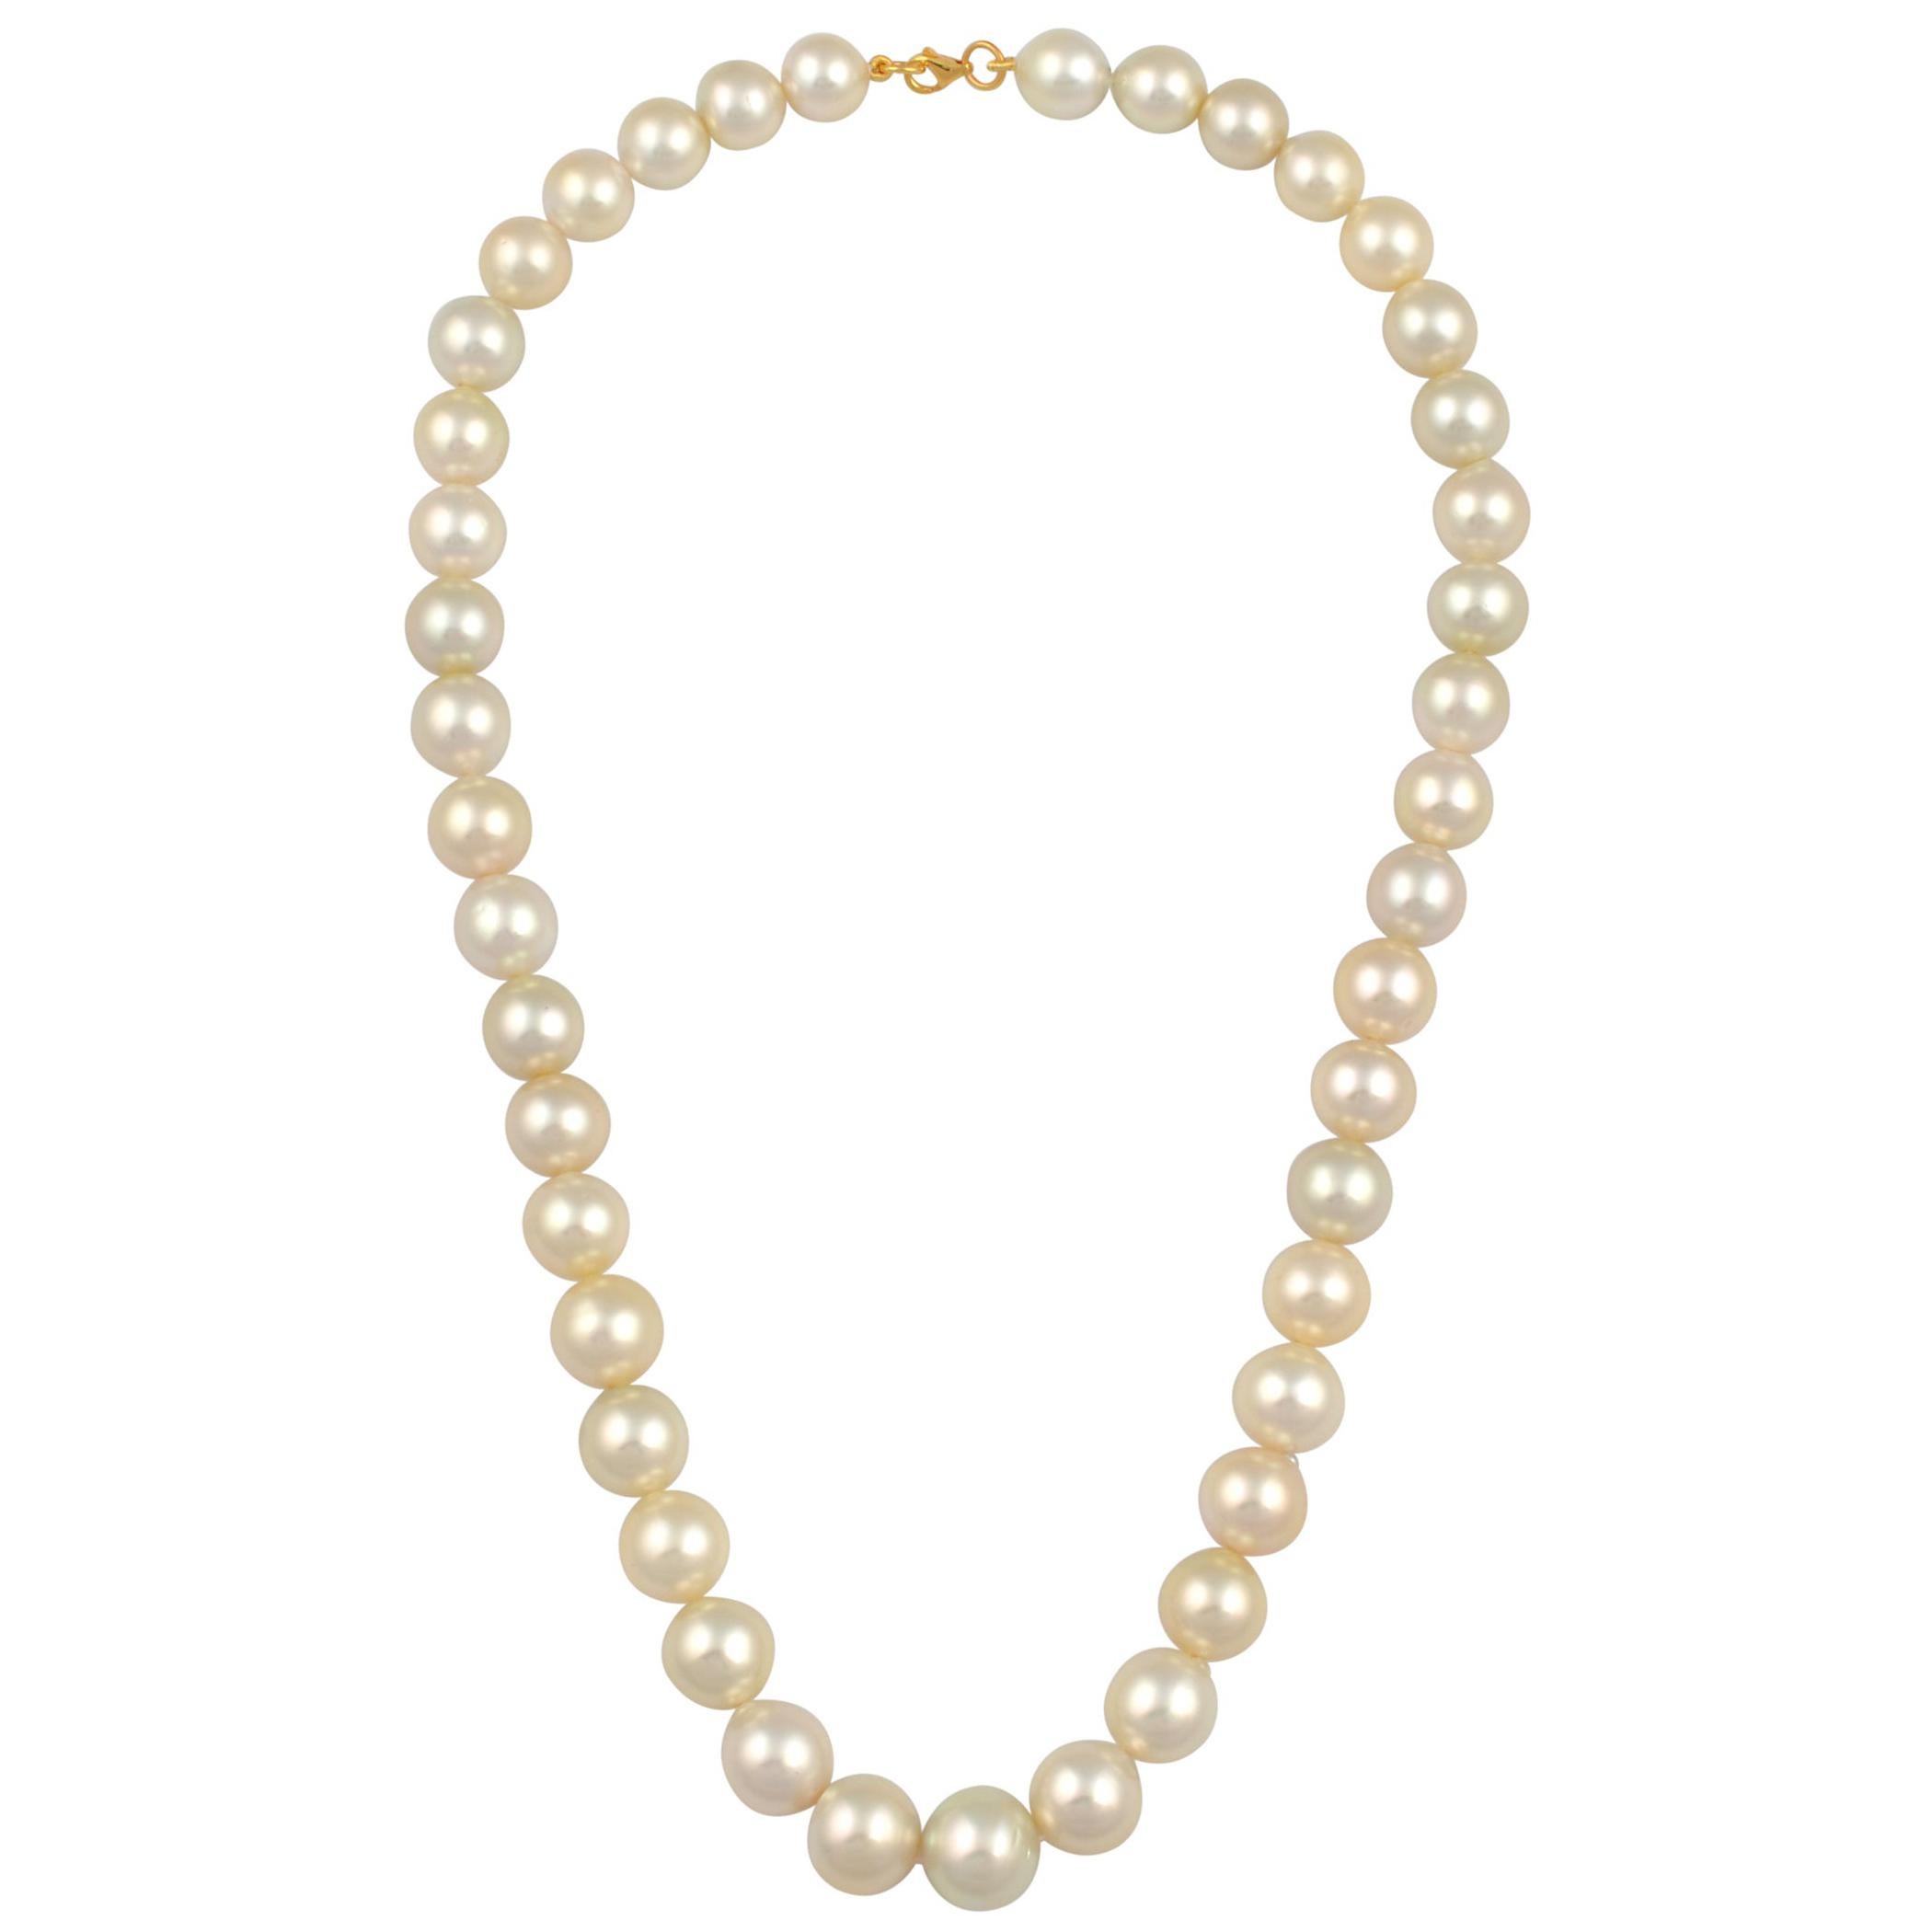 Graduating Cream Color South Sea Pearls Necklace 14 Karat Yellow Gold Clasp